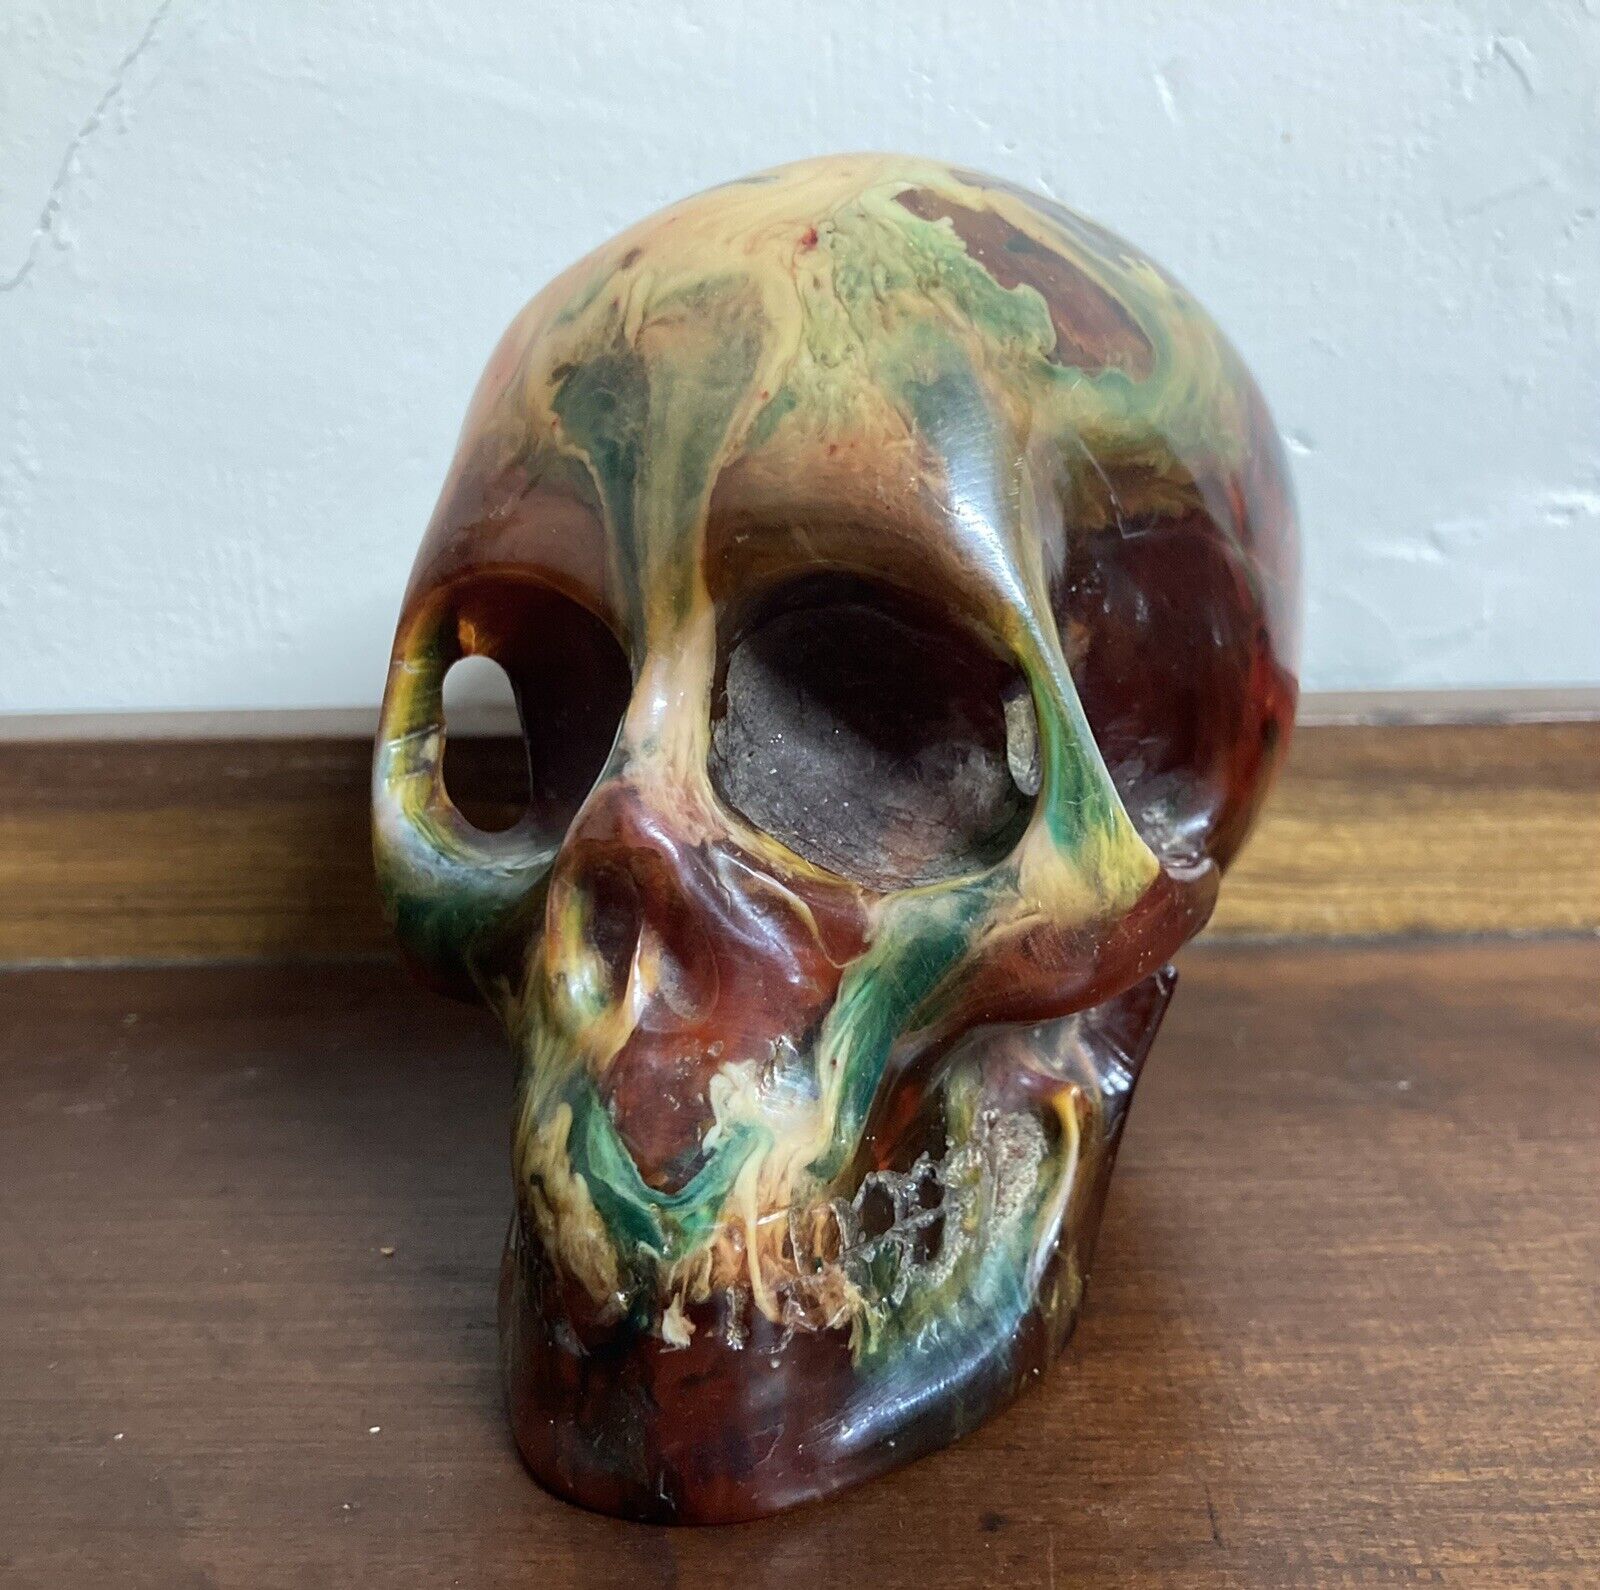 Vintage Carved Bakelite Skull “End of Day” Sculpture Red Swirl 1930s - Glows